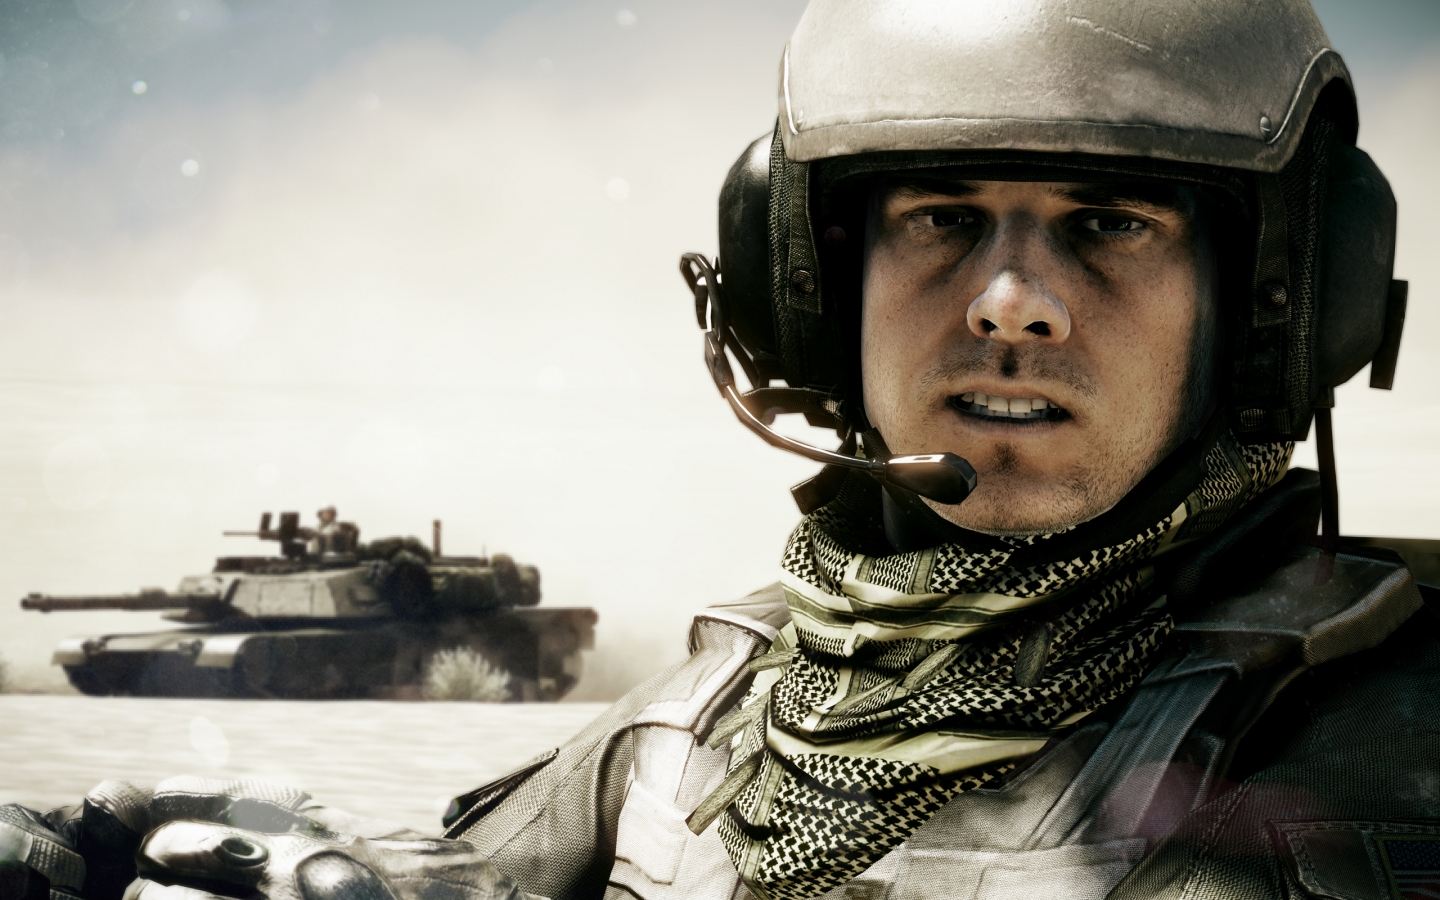 Battlefield 3 Character for 1440 x 900 widescreen resolution